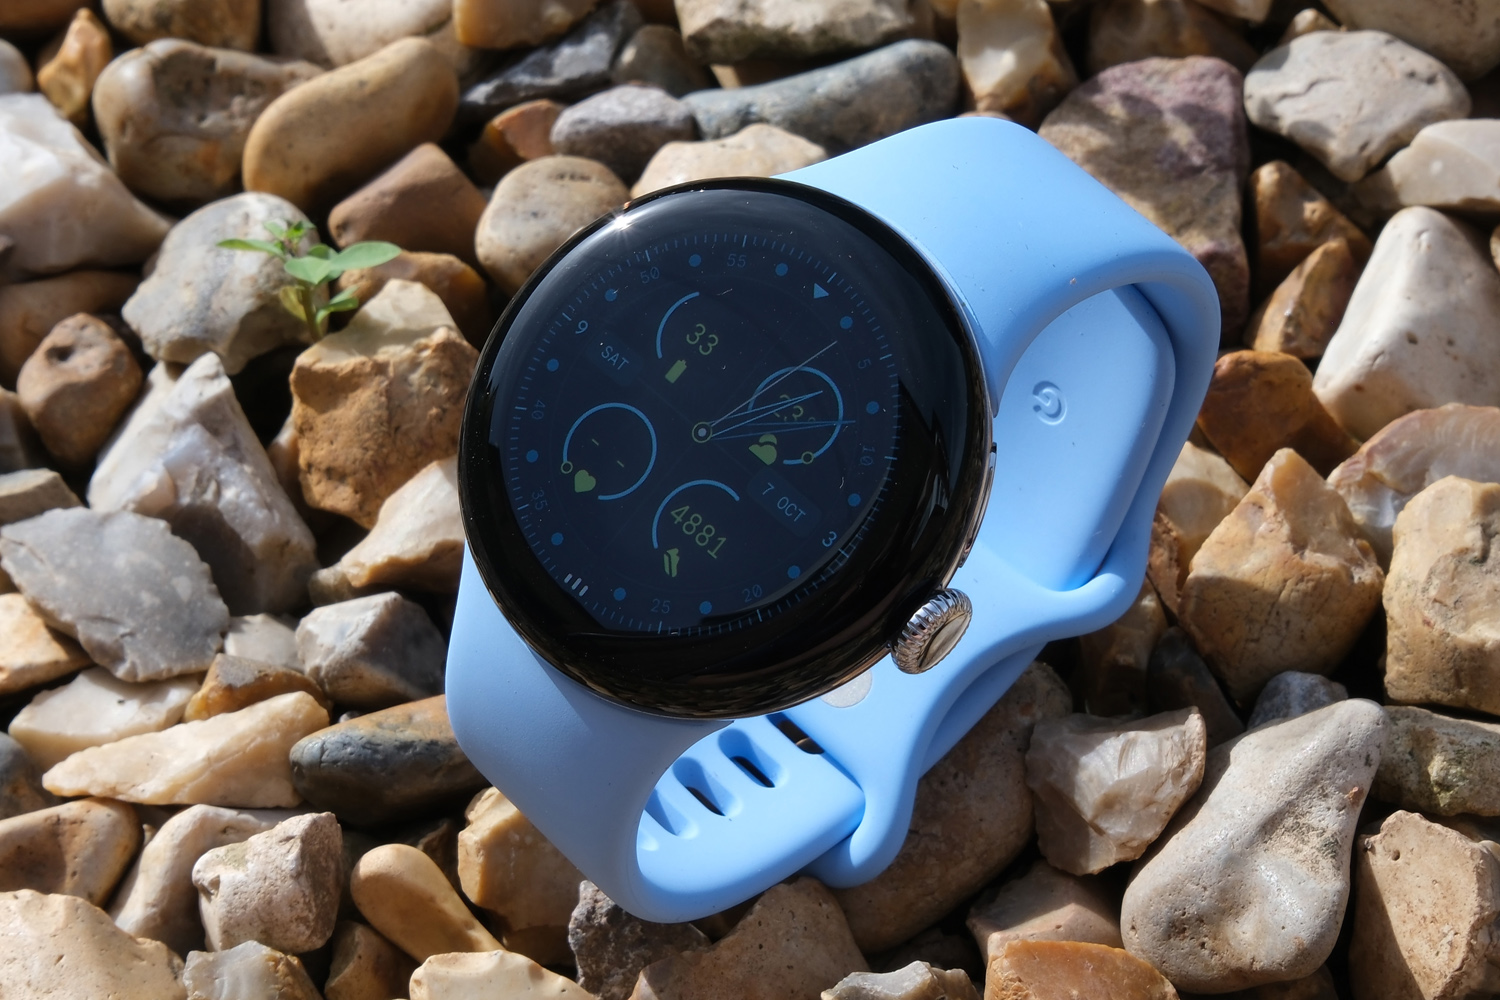 Google Pixel Watch review: A good smartwatch debut from Google